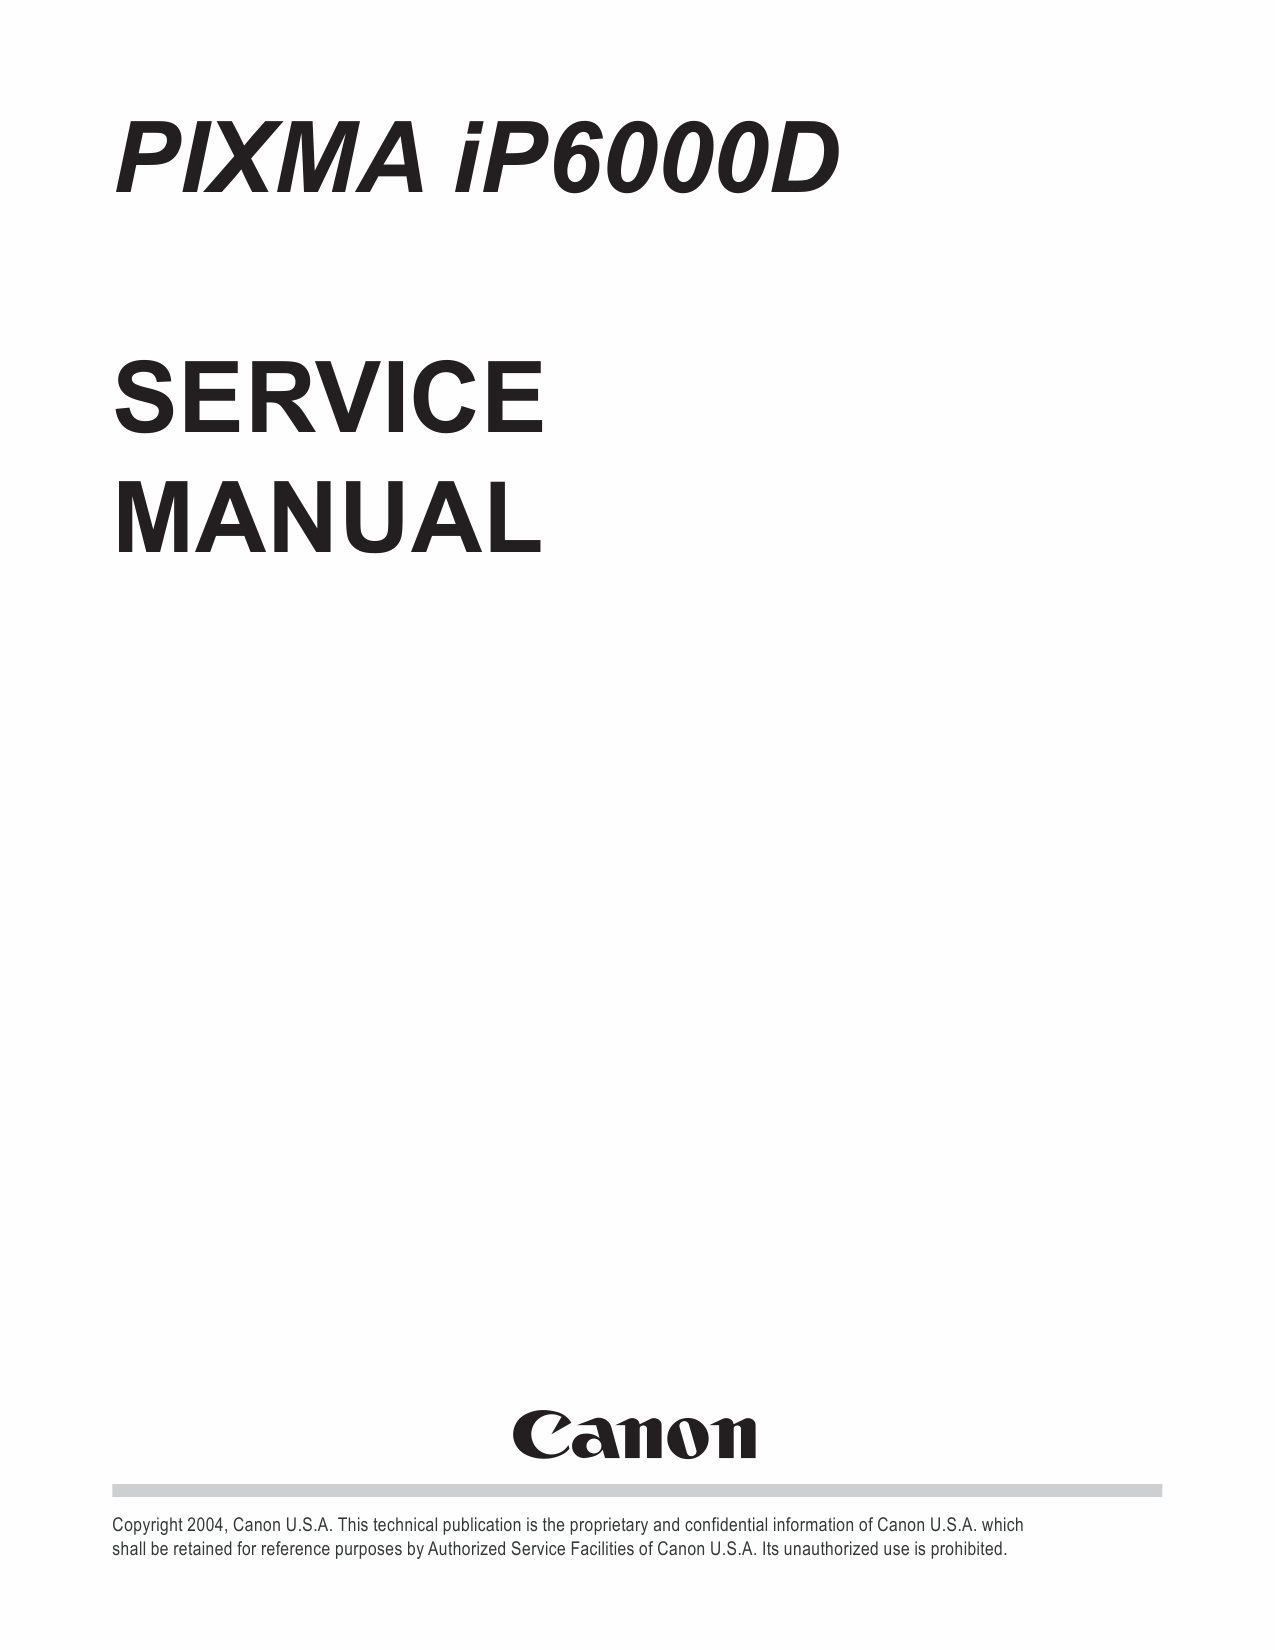 Canon PIXMA iP6000D Service Manual-1